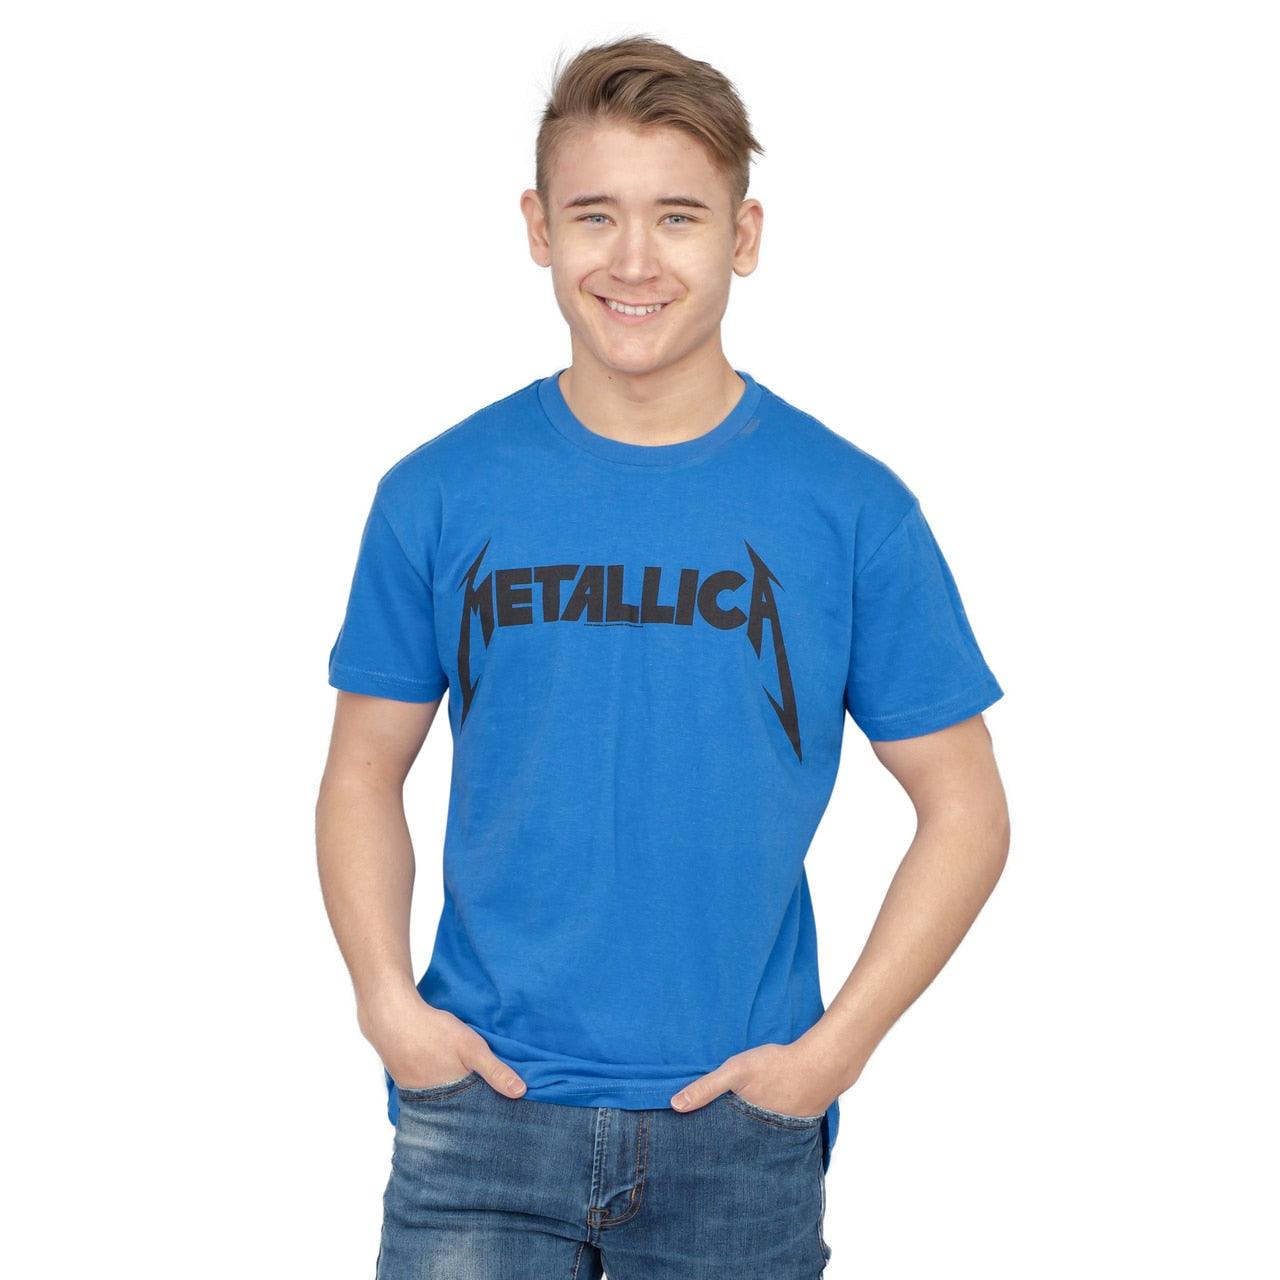 Metallica T Shirt Featured on Beavis & Butthead-tvso